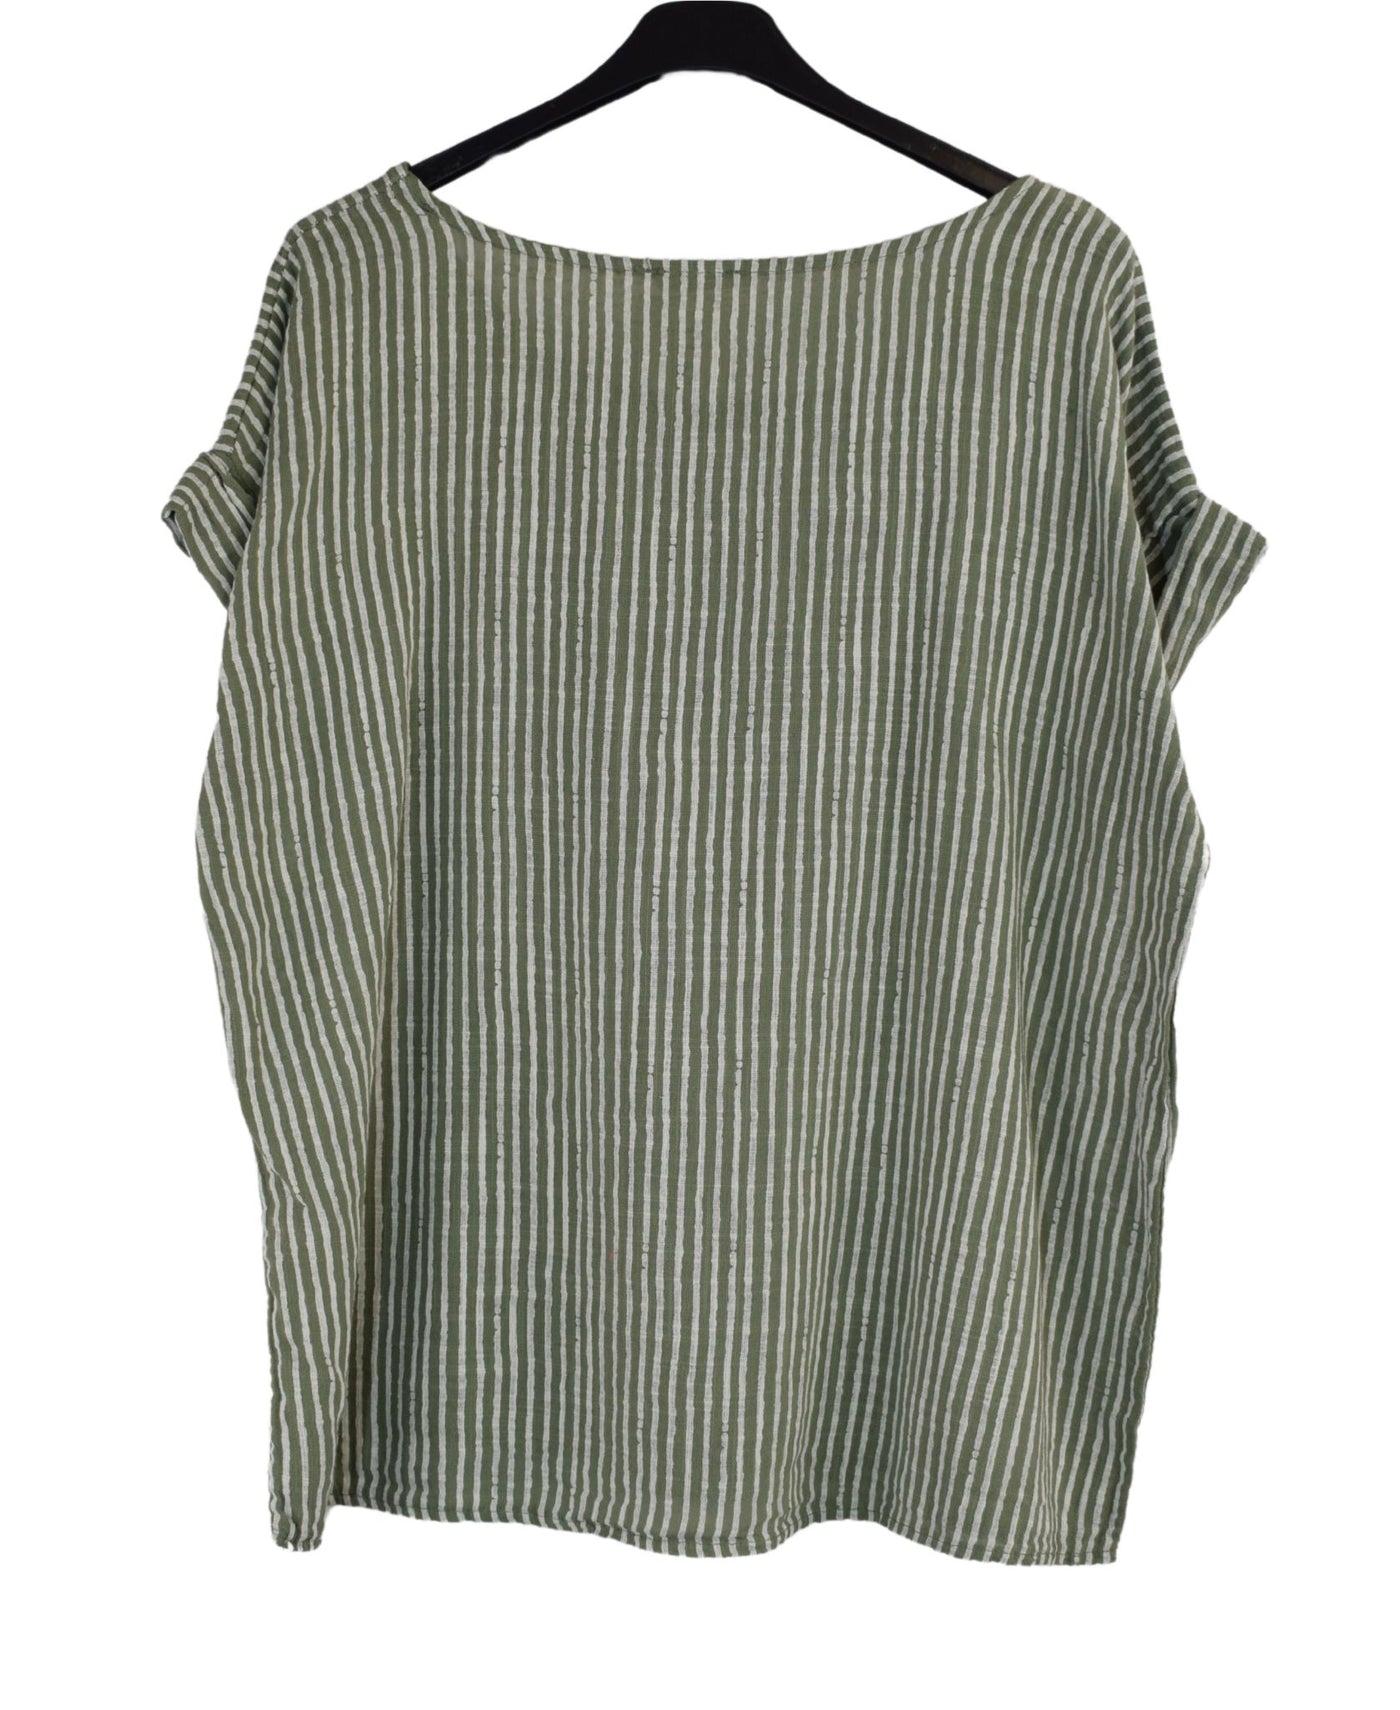 Striped Women's Summer top cotton lightweight Blouse casual loose Hand made short sleeves baggy shirt one size Italian lagenlook cotton shirt